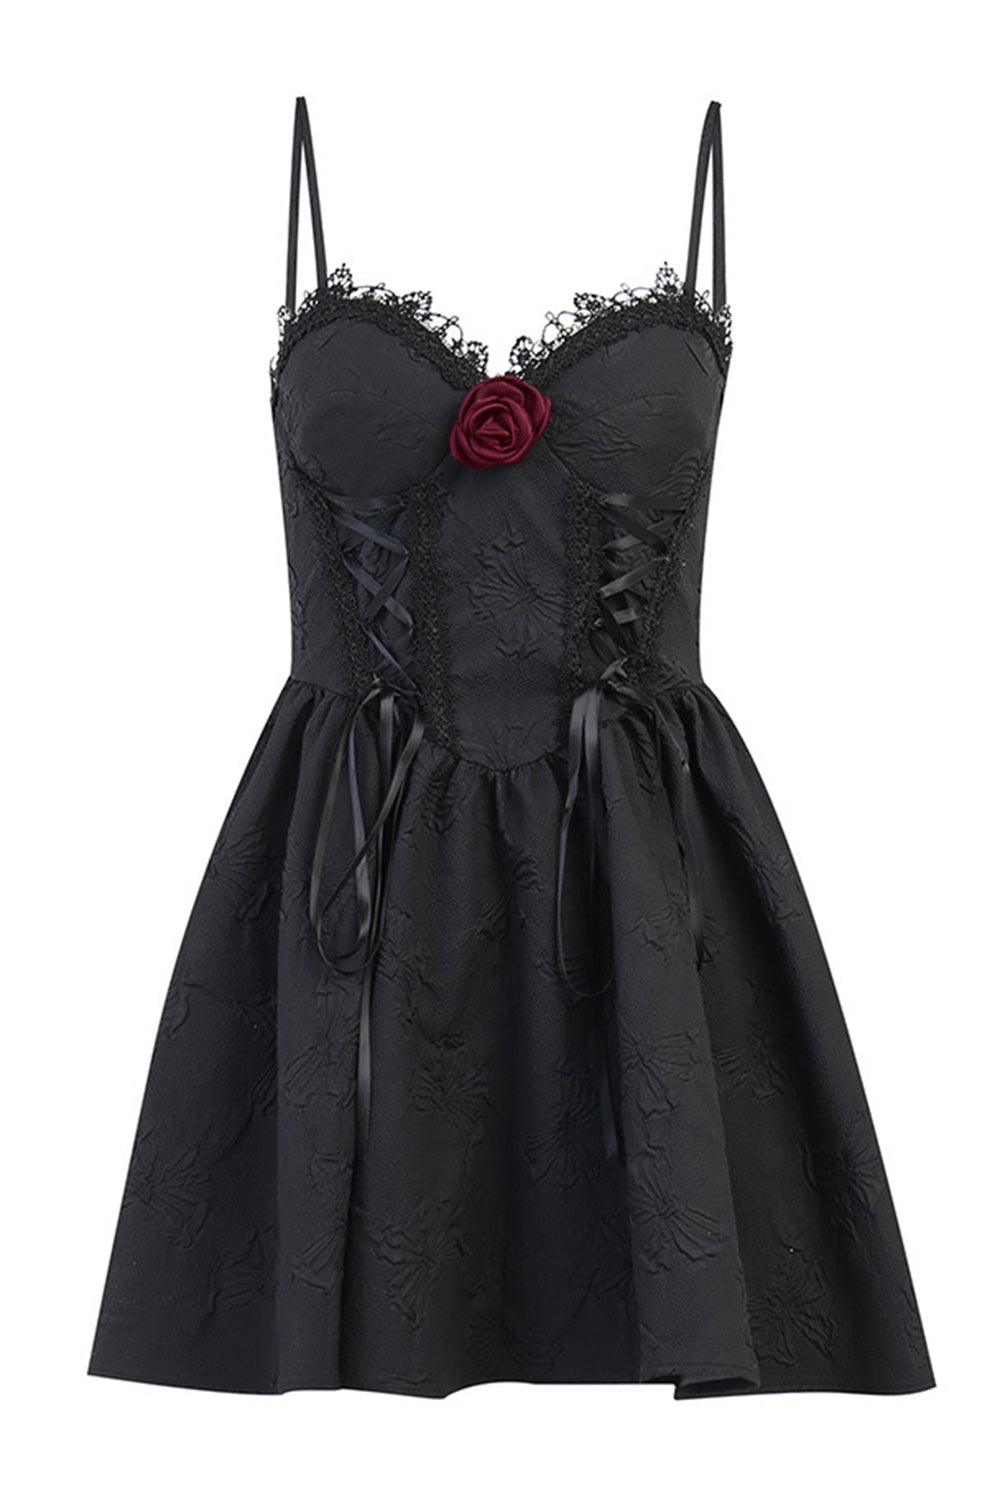 Spaghetti Straps Black 1950s Dress with Lace